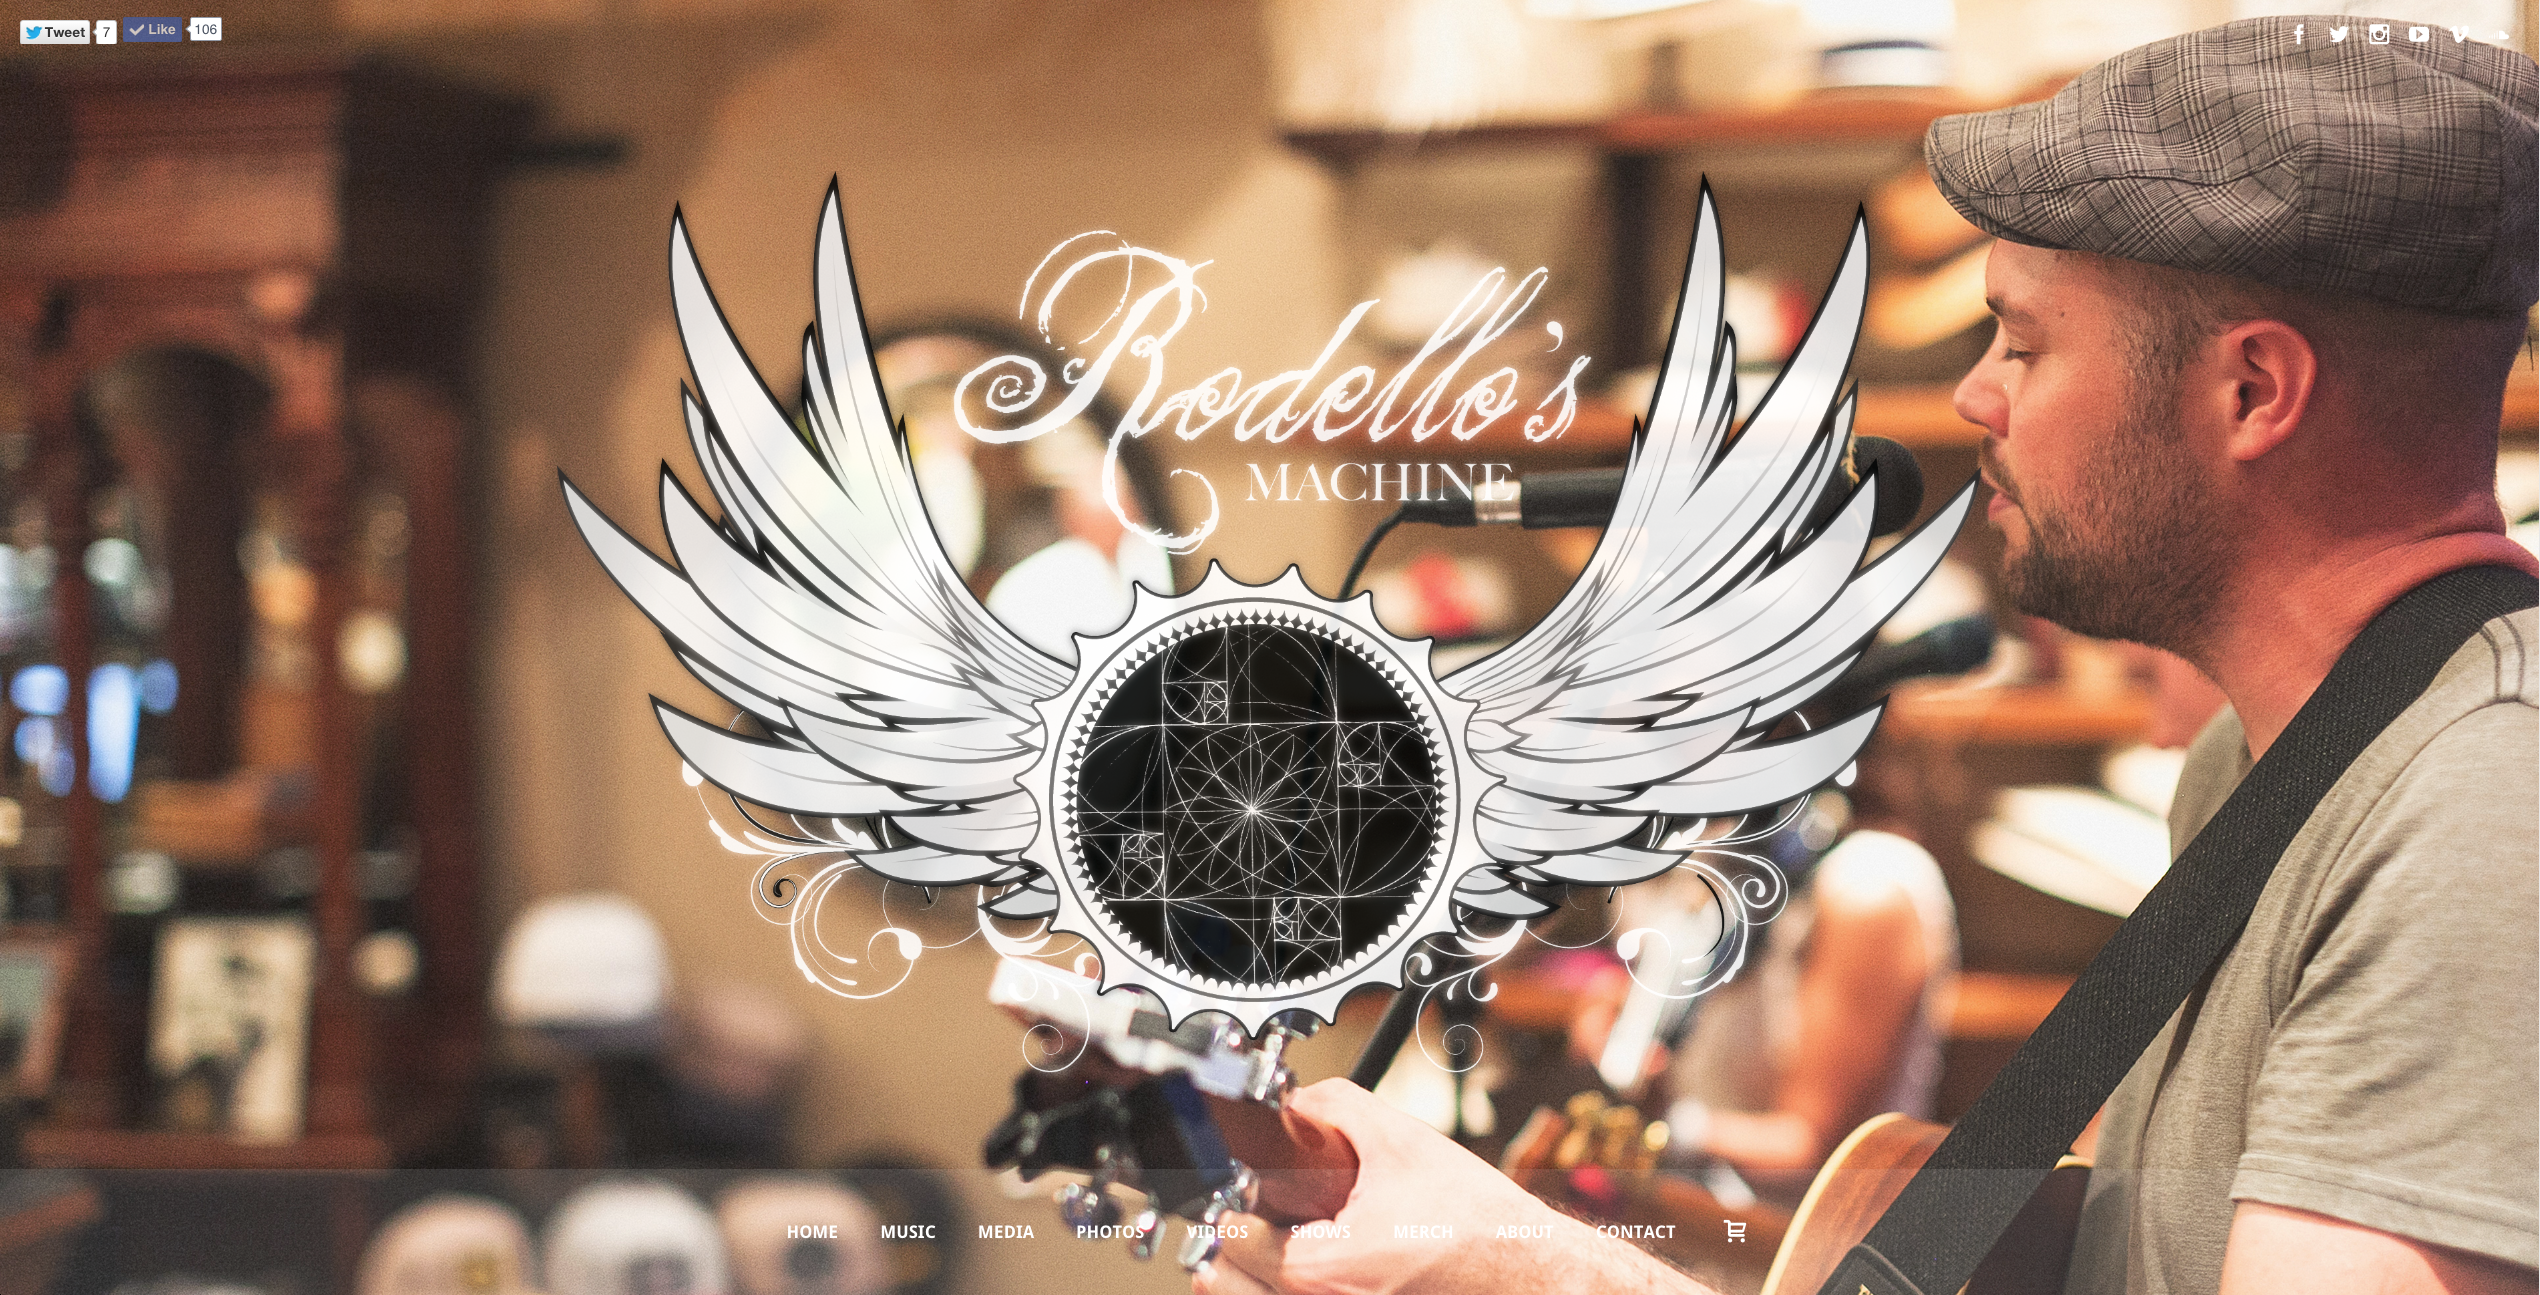 Website Production – Rodello’s Machine